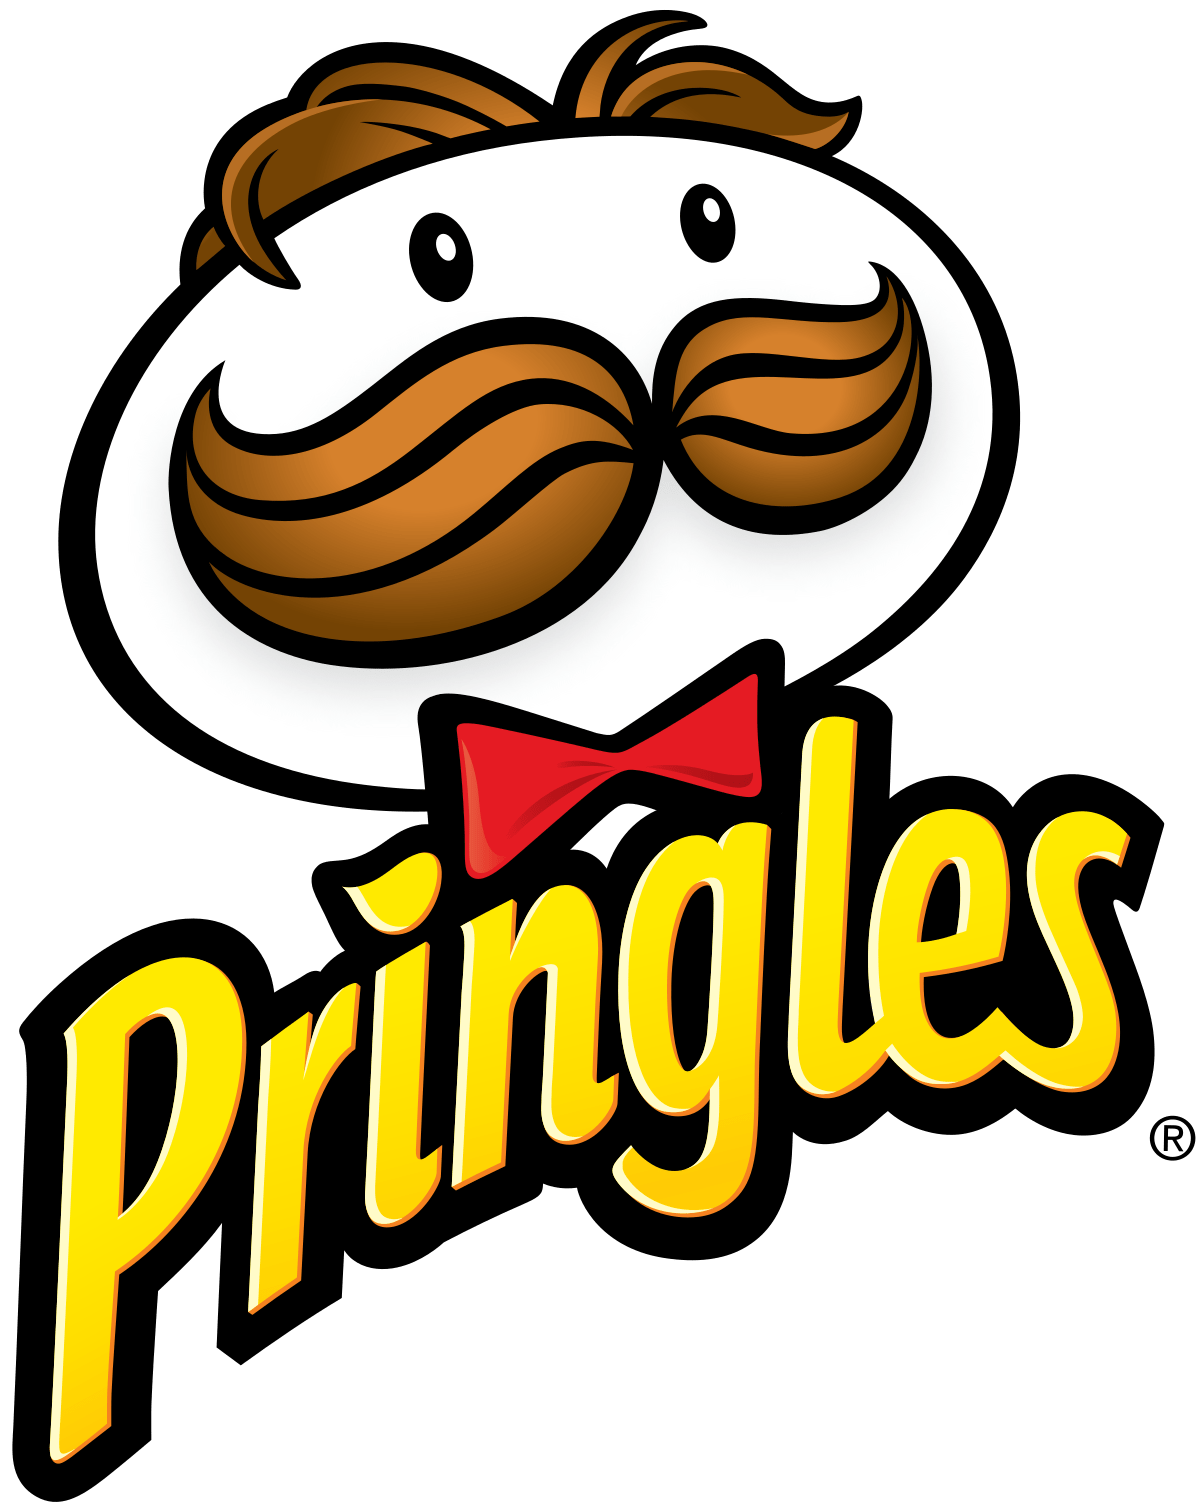 Pringles Logo | The Most Famo